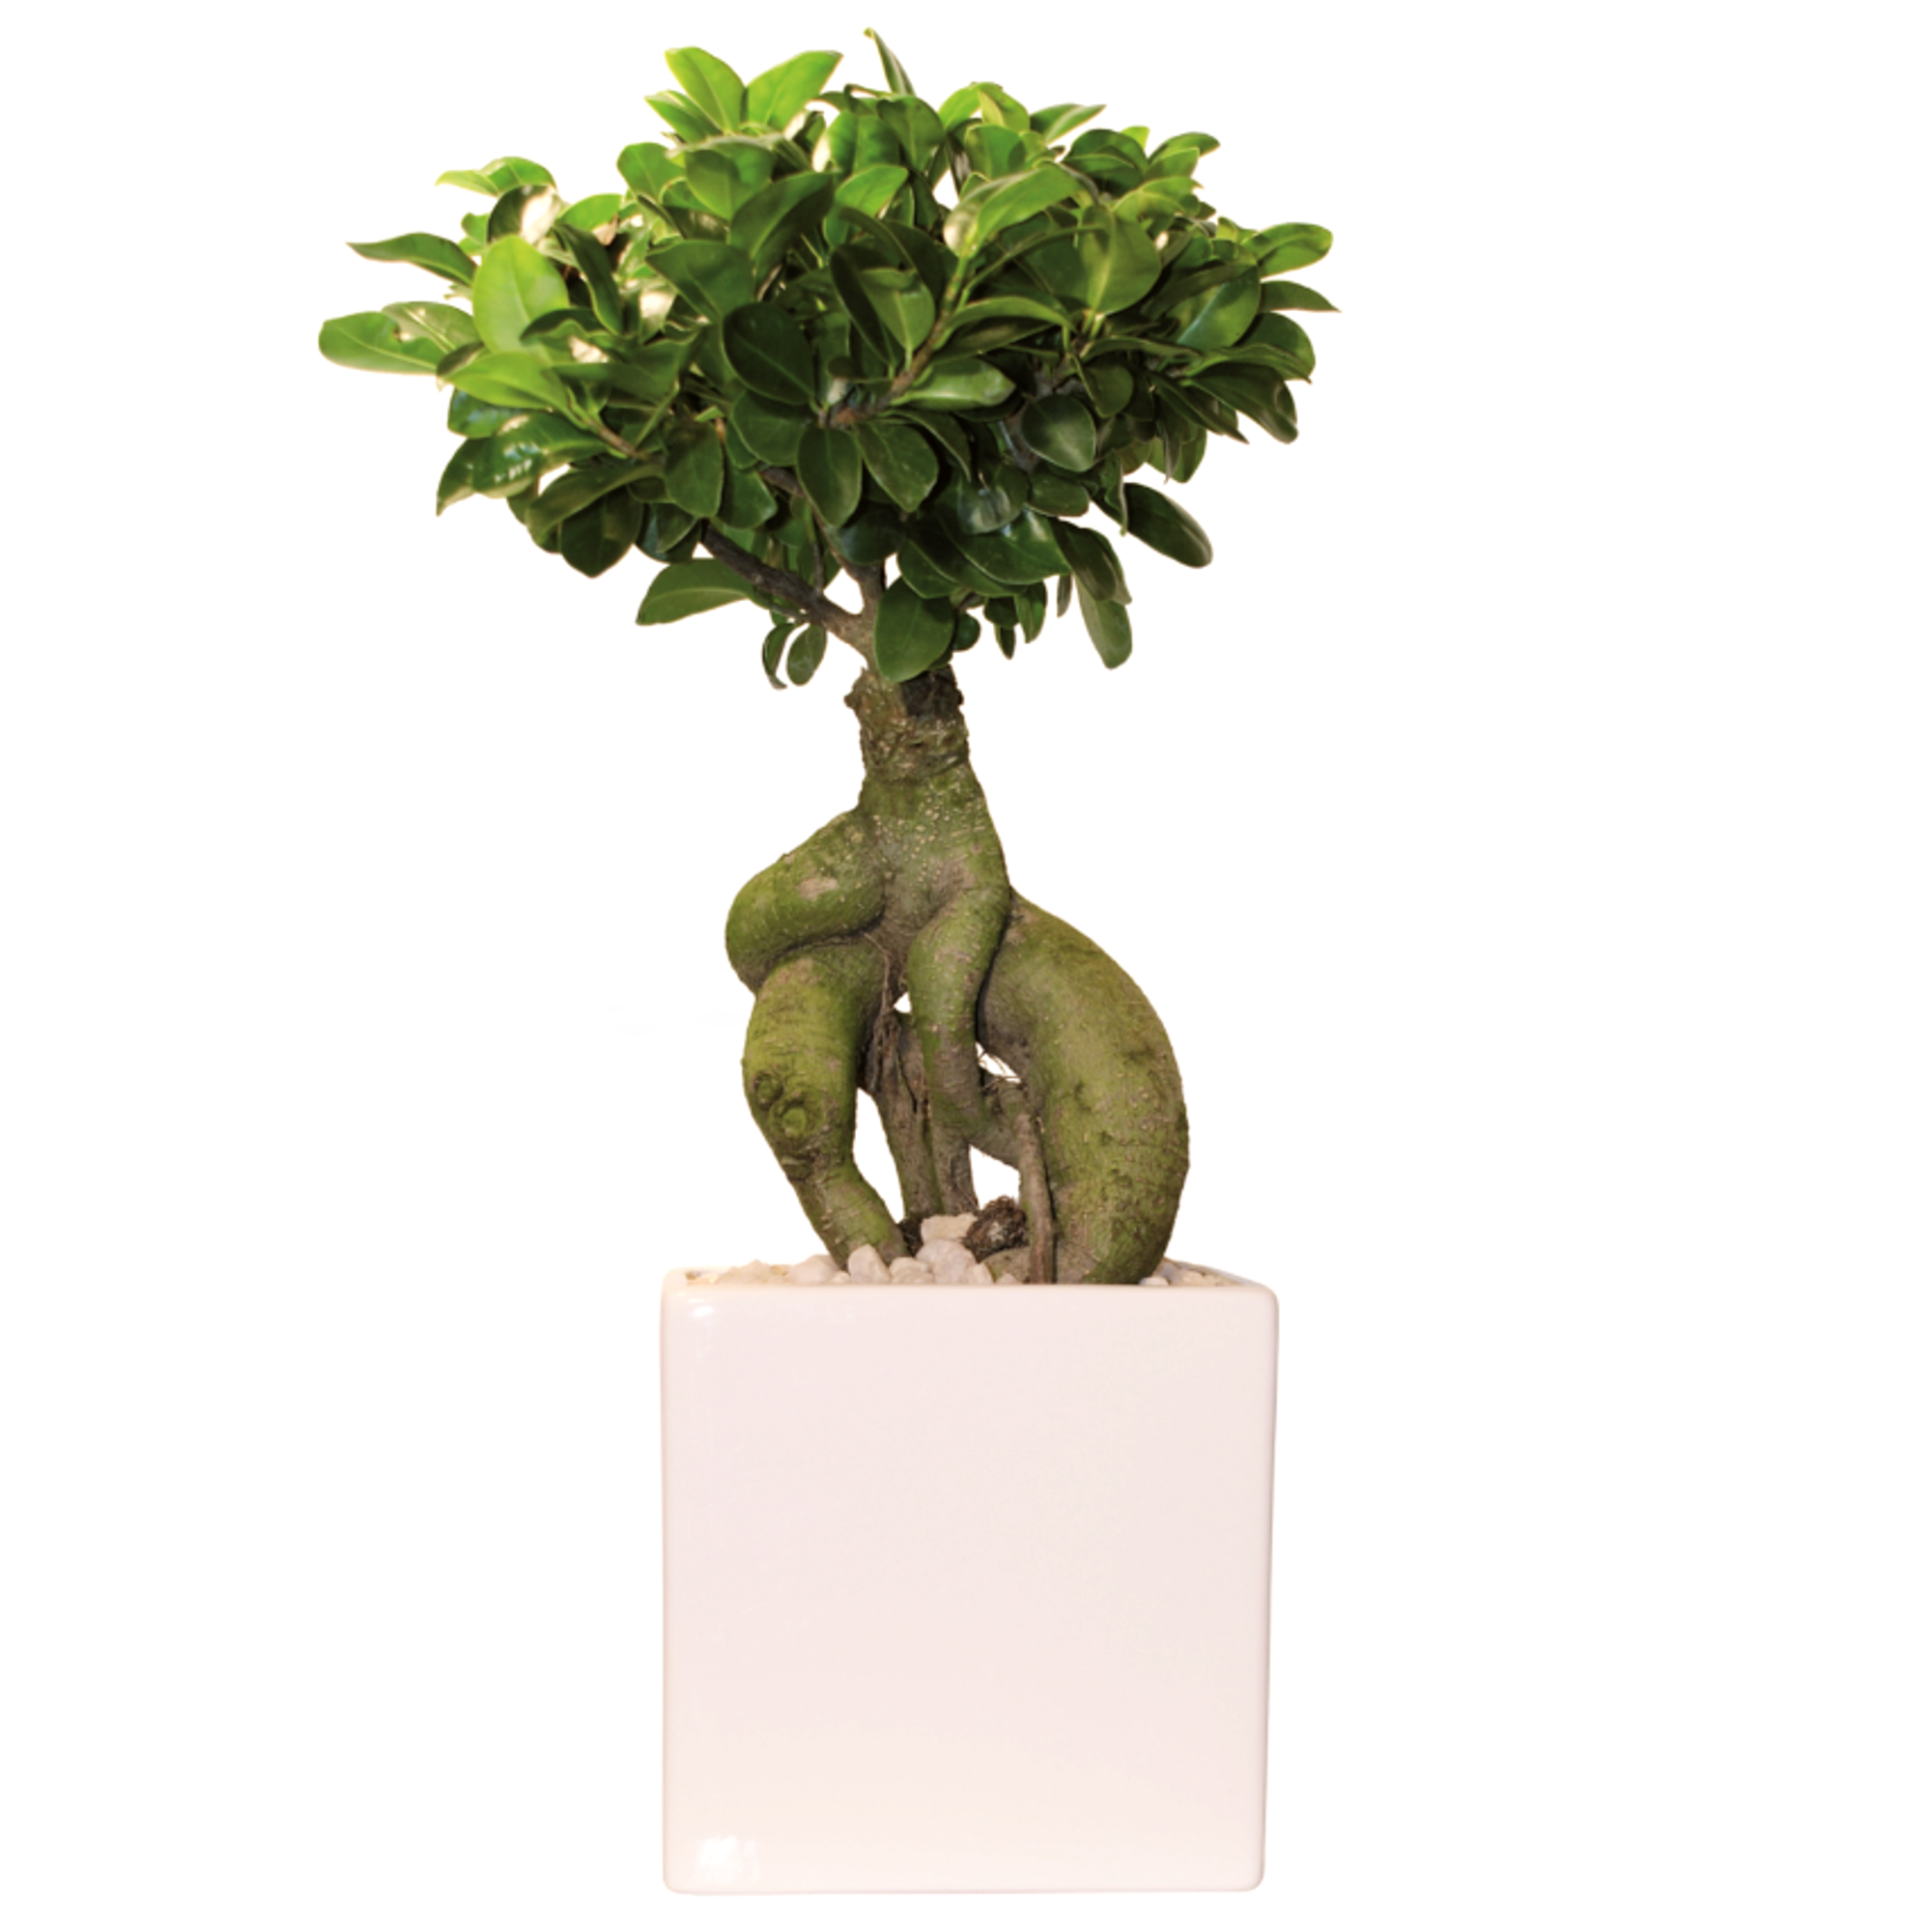 Zimmerbonsai Ficus 'Ginseng' in Keramik verschiedene Farben 13 cm + product picture